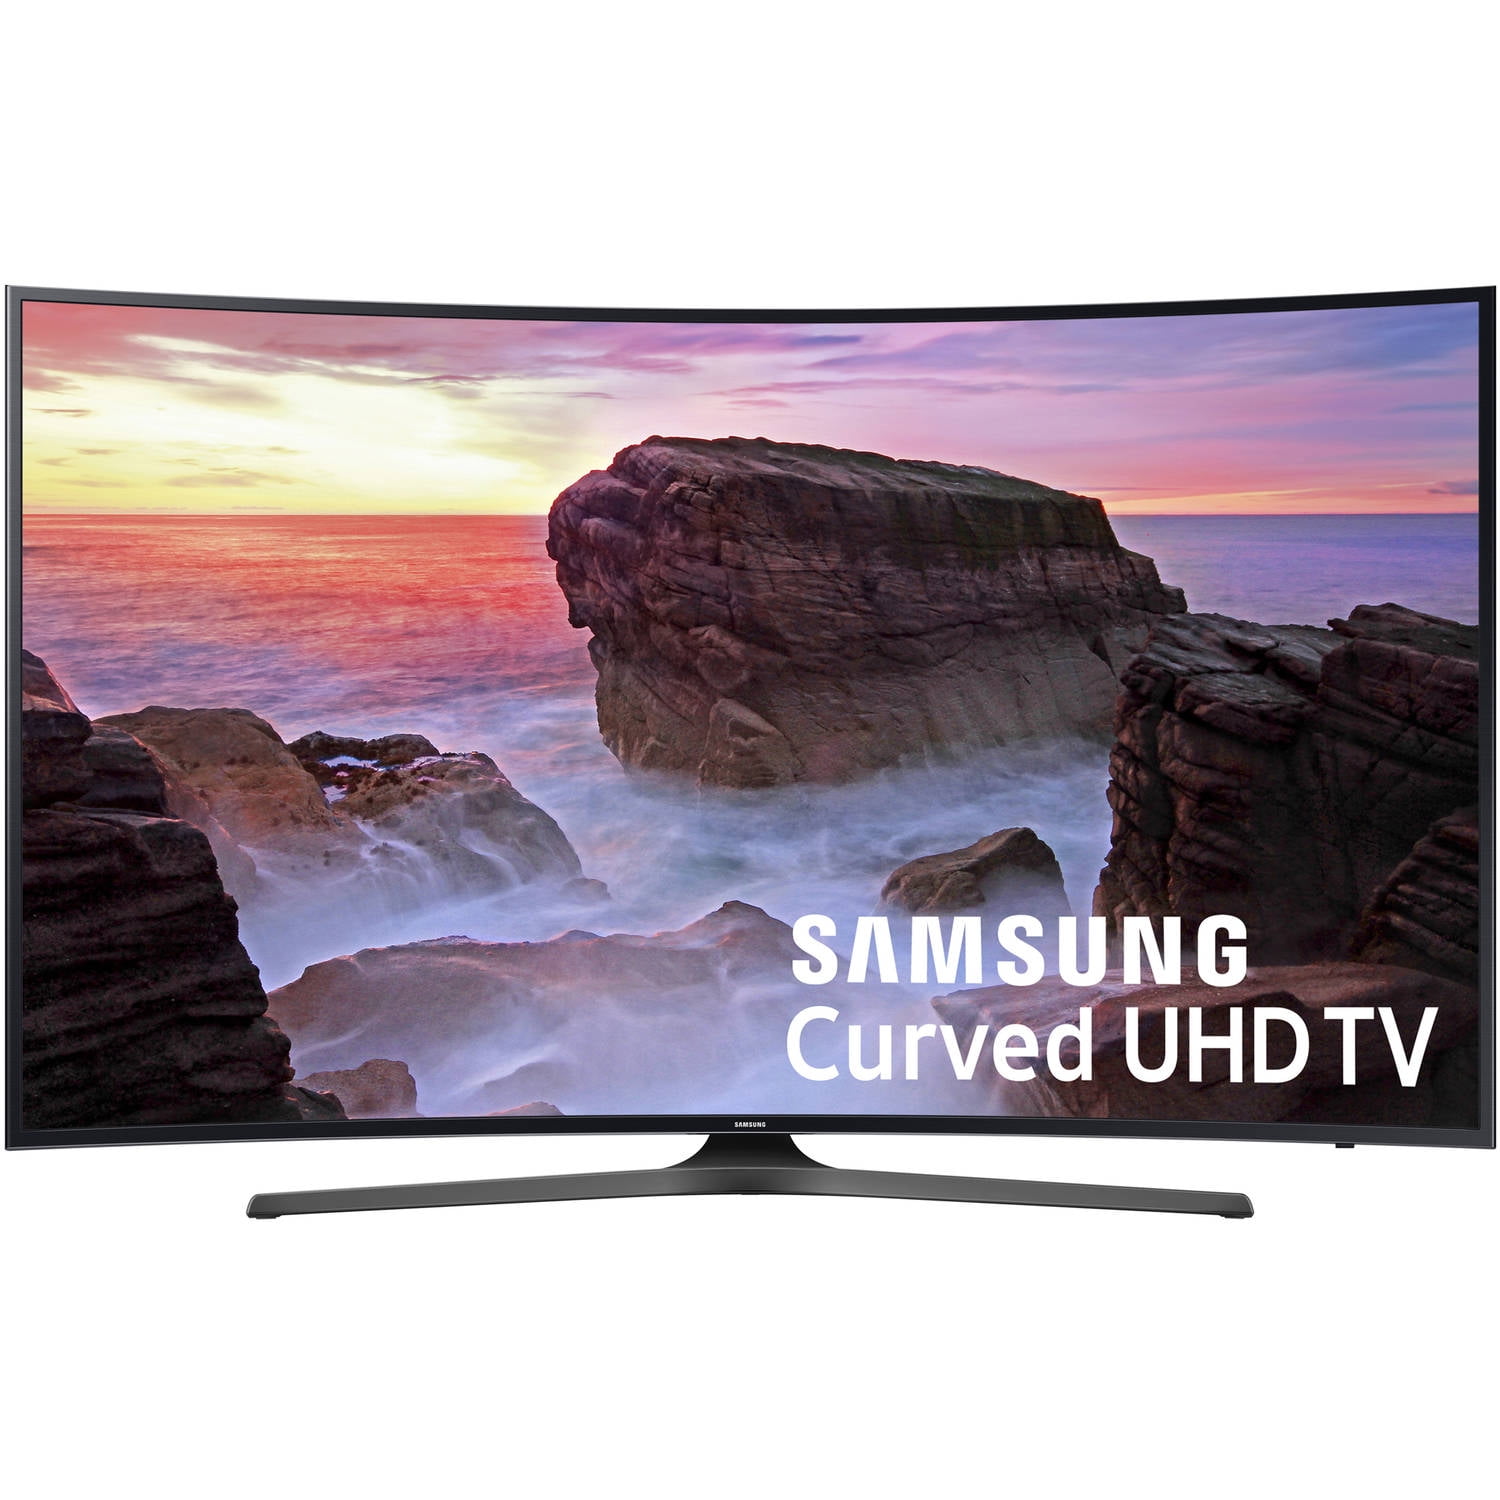 Put Acquiesce Possession SAMSUNG 55" Class Curved 4K (2160P) Ultra HD Smart LED TV (UN55MU6500FXZA)  - Walmart.com